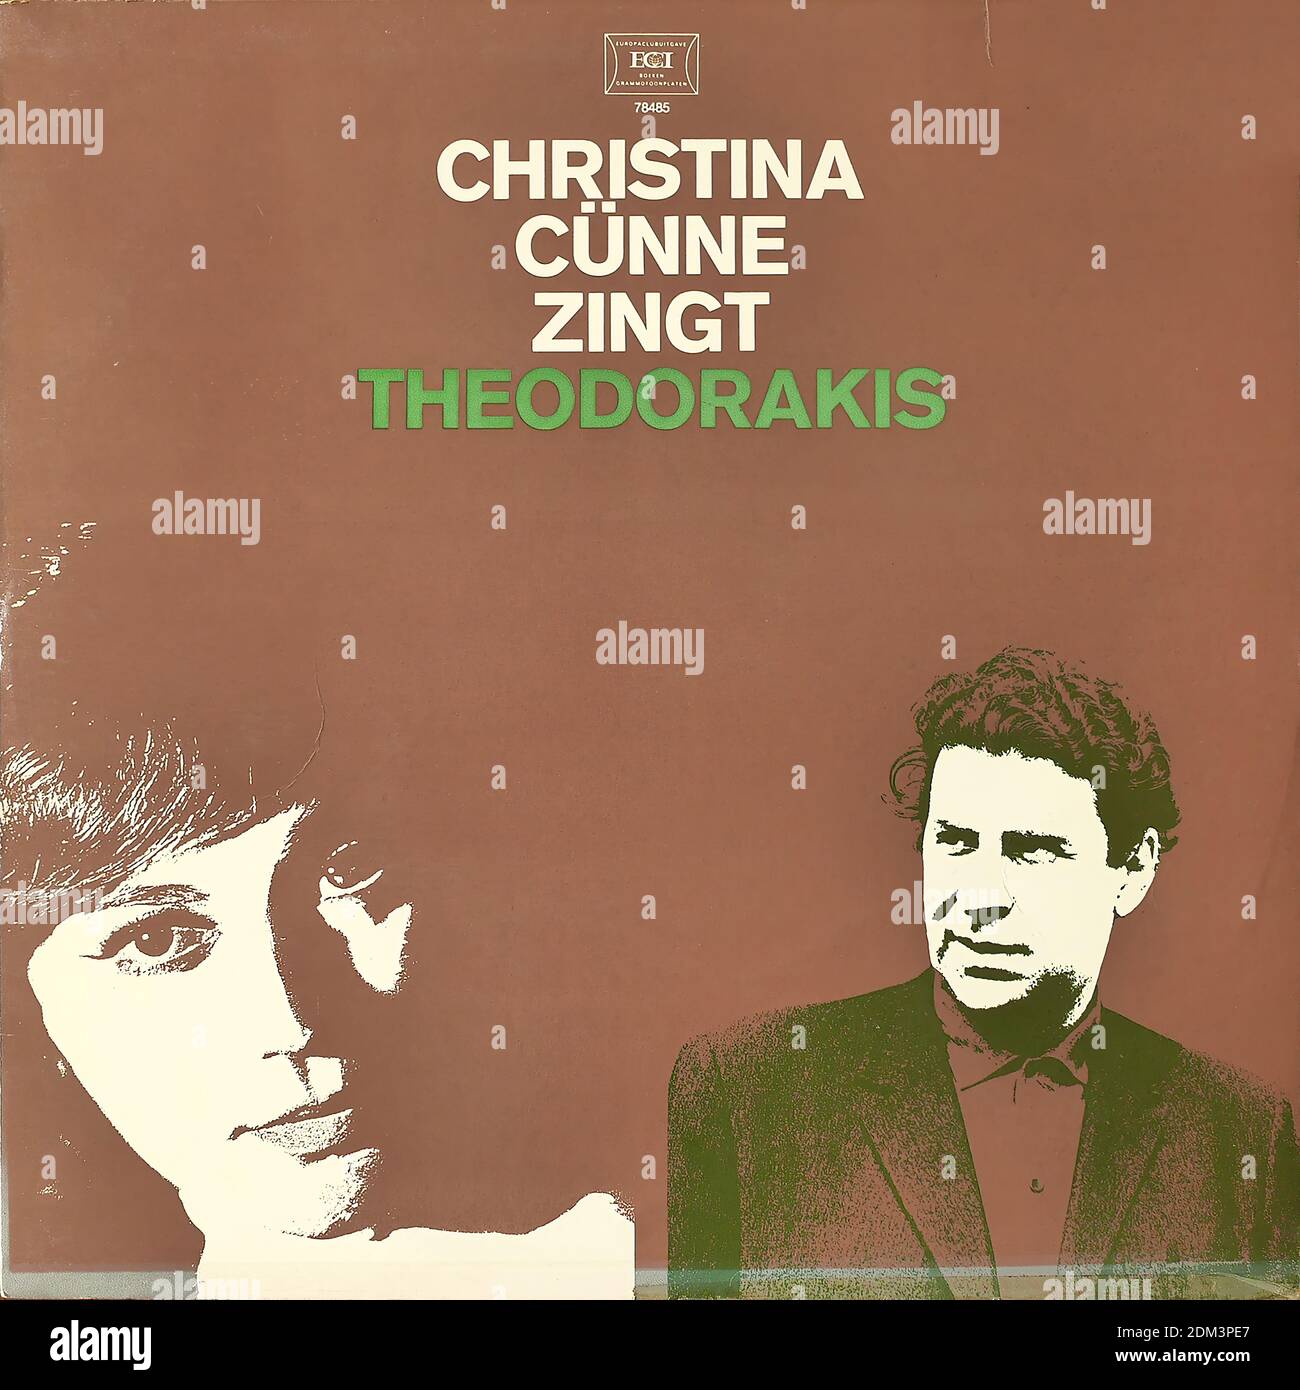 Theodorakis - Cristina Cunne zingt, ECI 78485 - Vintage Vinyl Album Cover Stockfoto